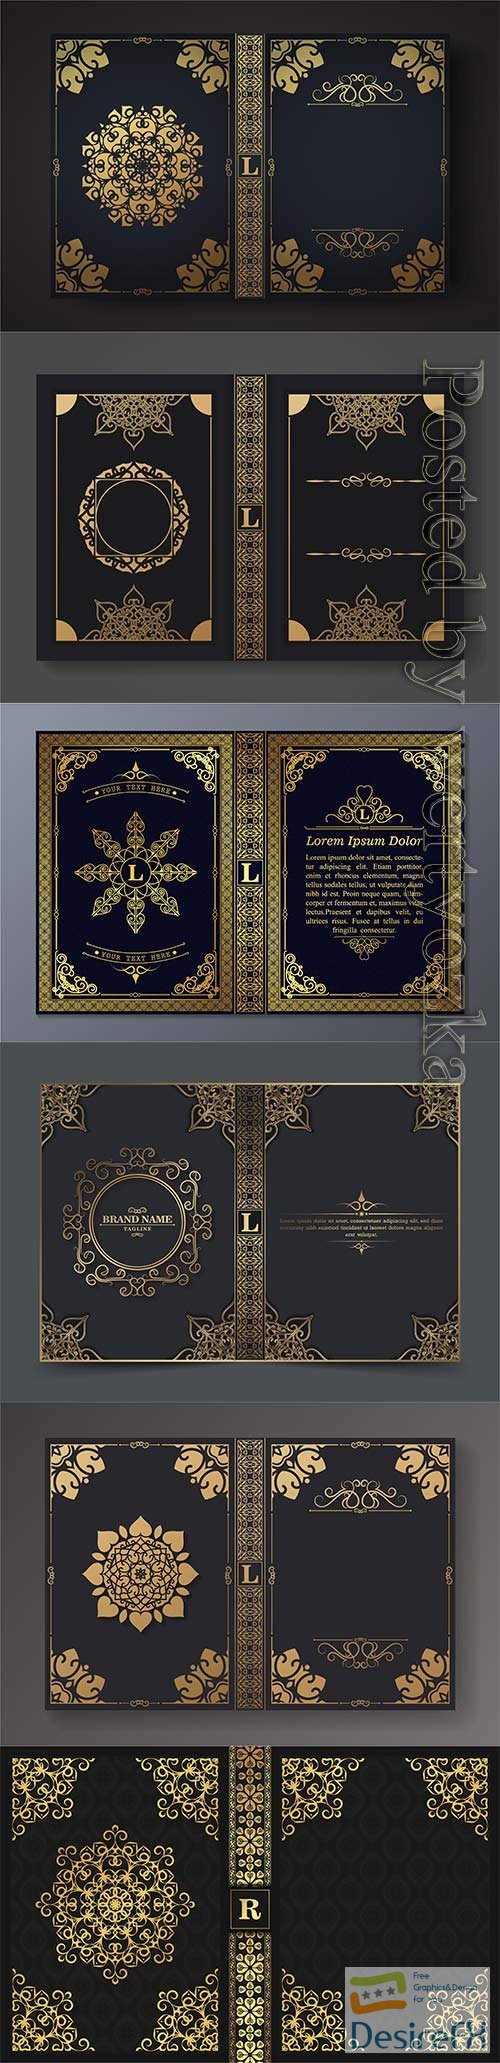 Luxury ornamental book cover design in vector